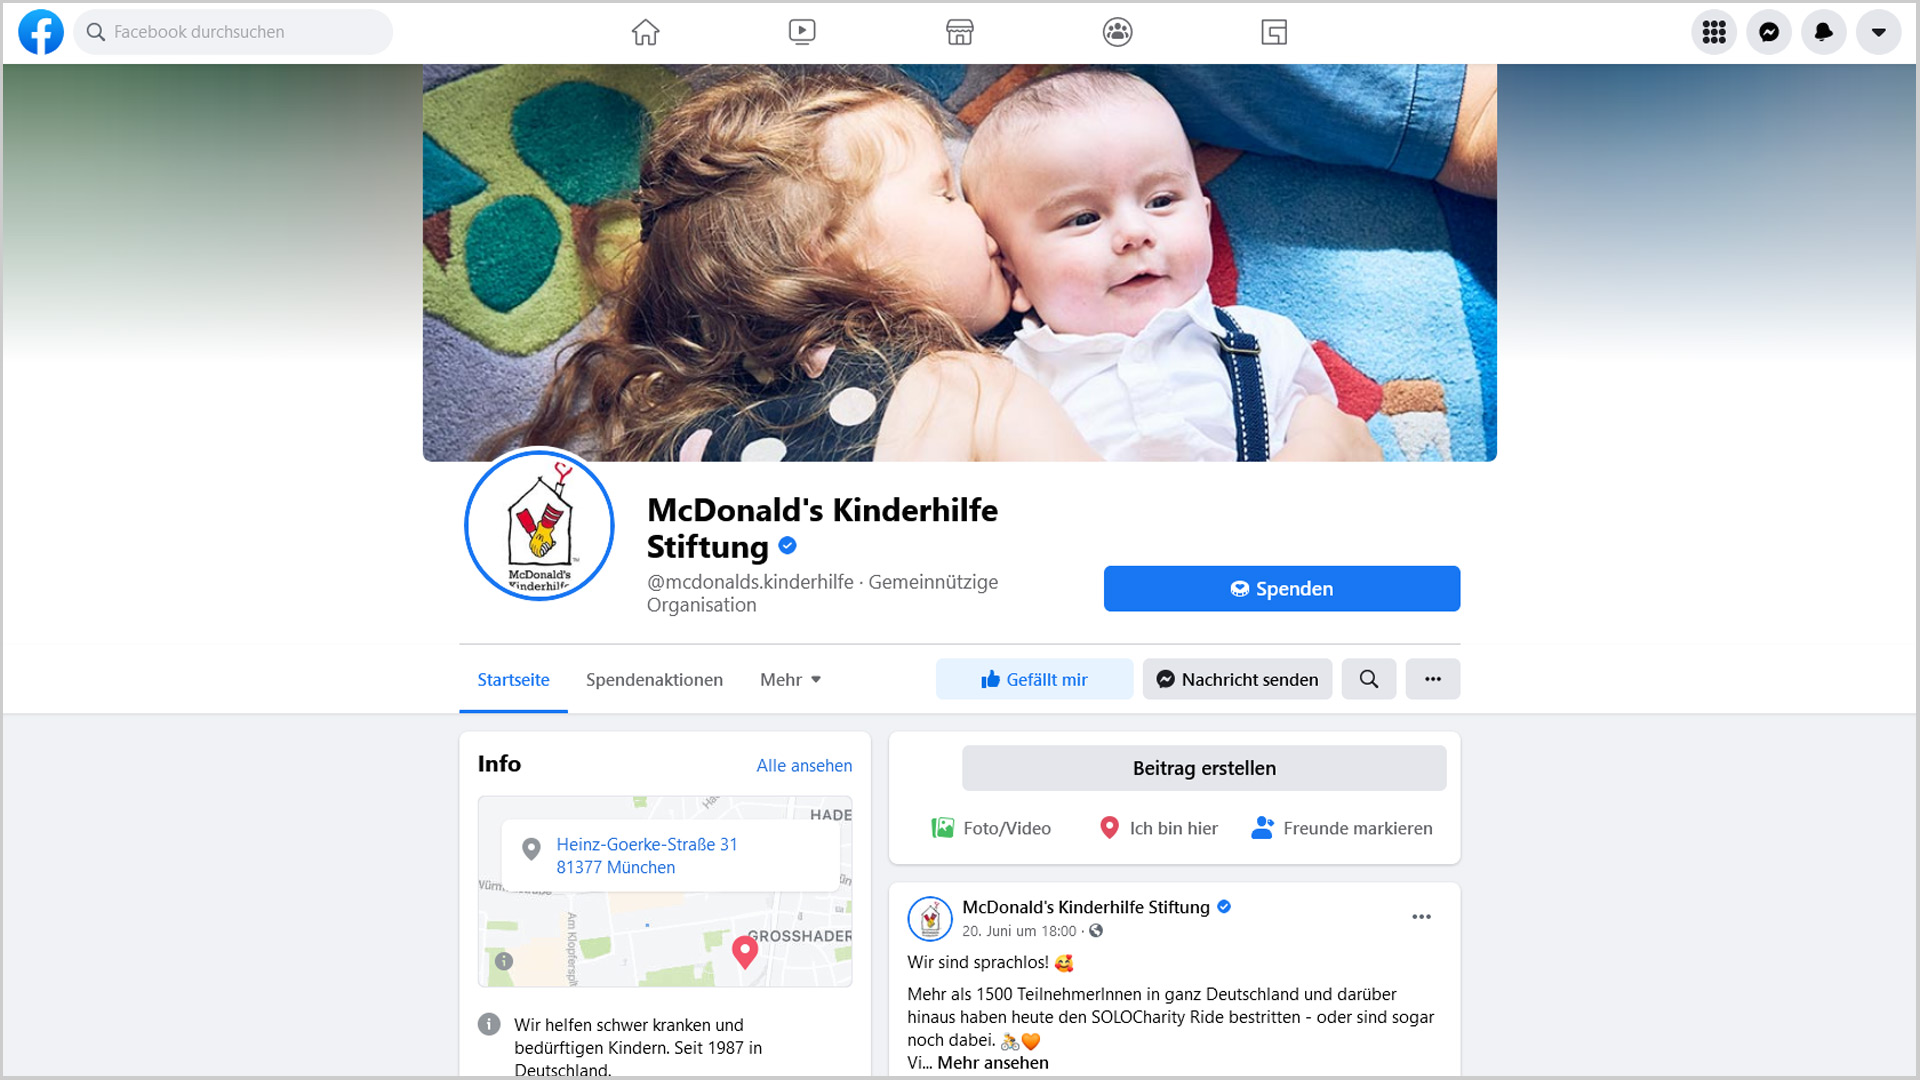 McDonald's Kinderhilfe Stiftung auf Facebook